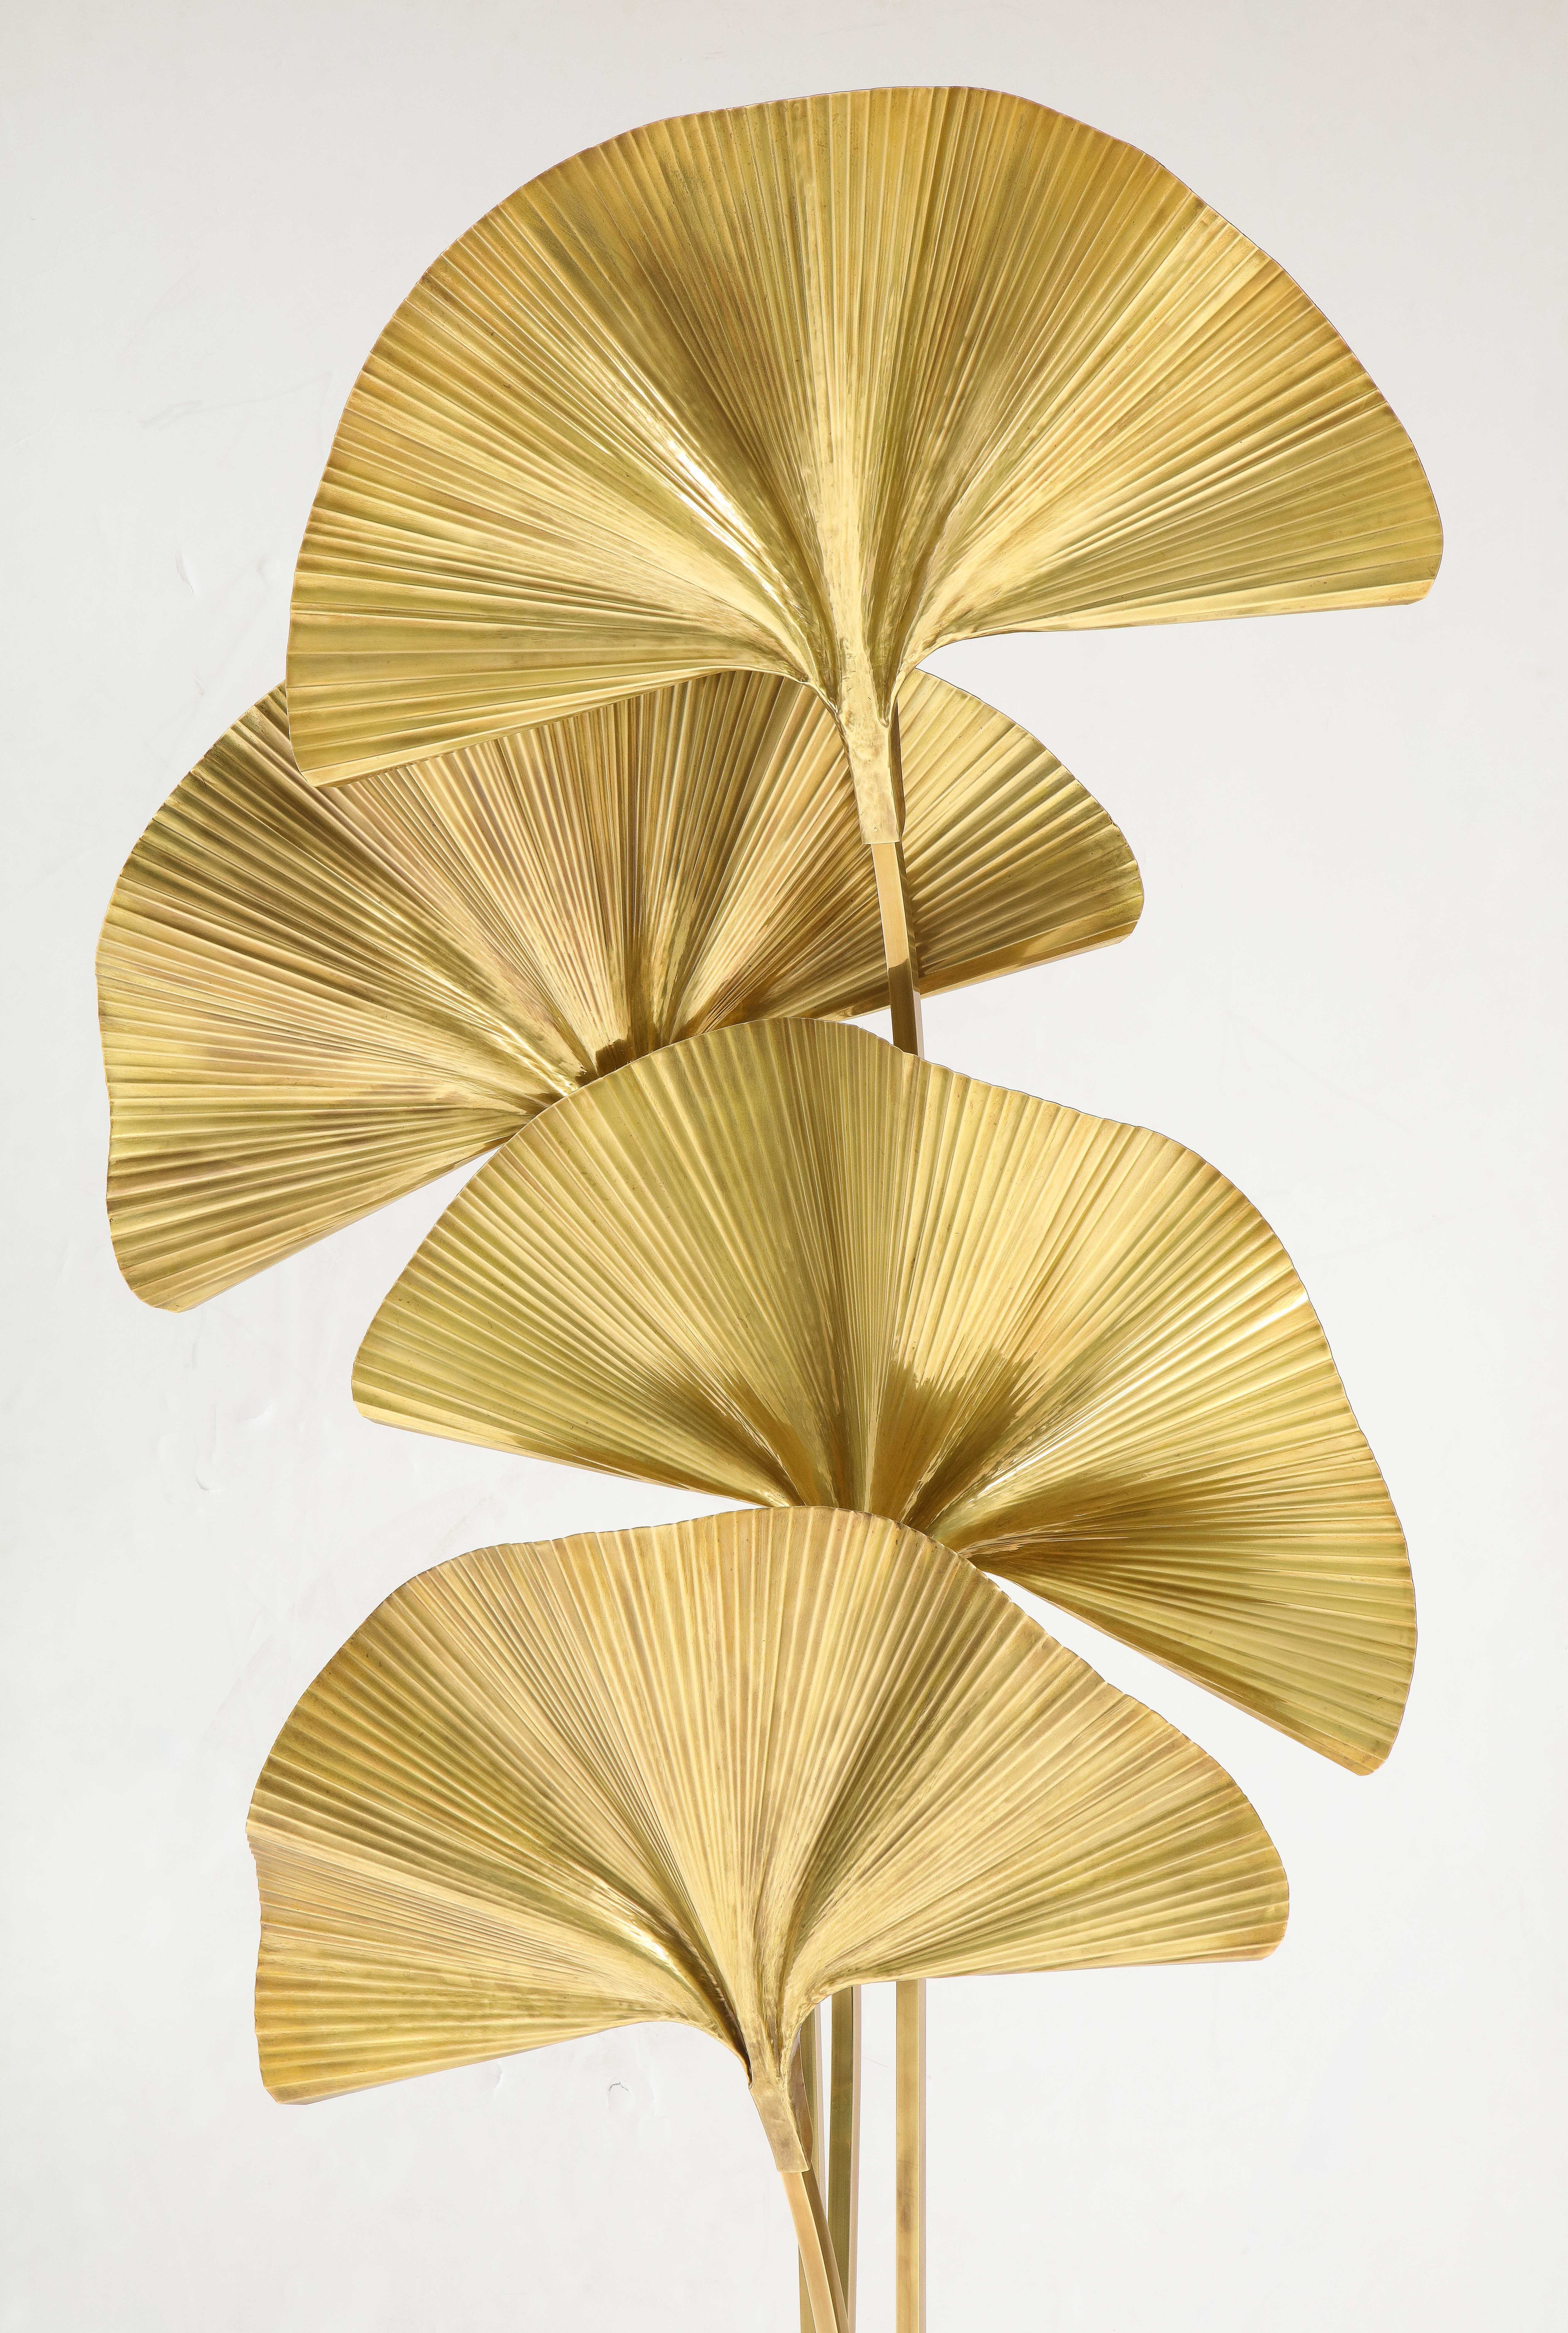 Carlo Giorgi for Bottega Gadda Four-Leaf Brass Ginkgo Floor Lamp, Italy 1970s In Good Condition In New York, NY